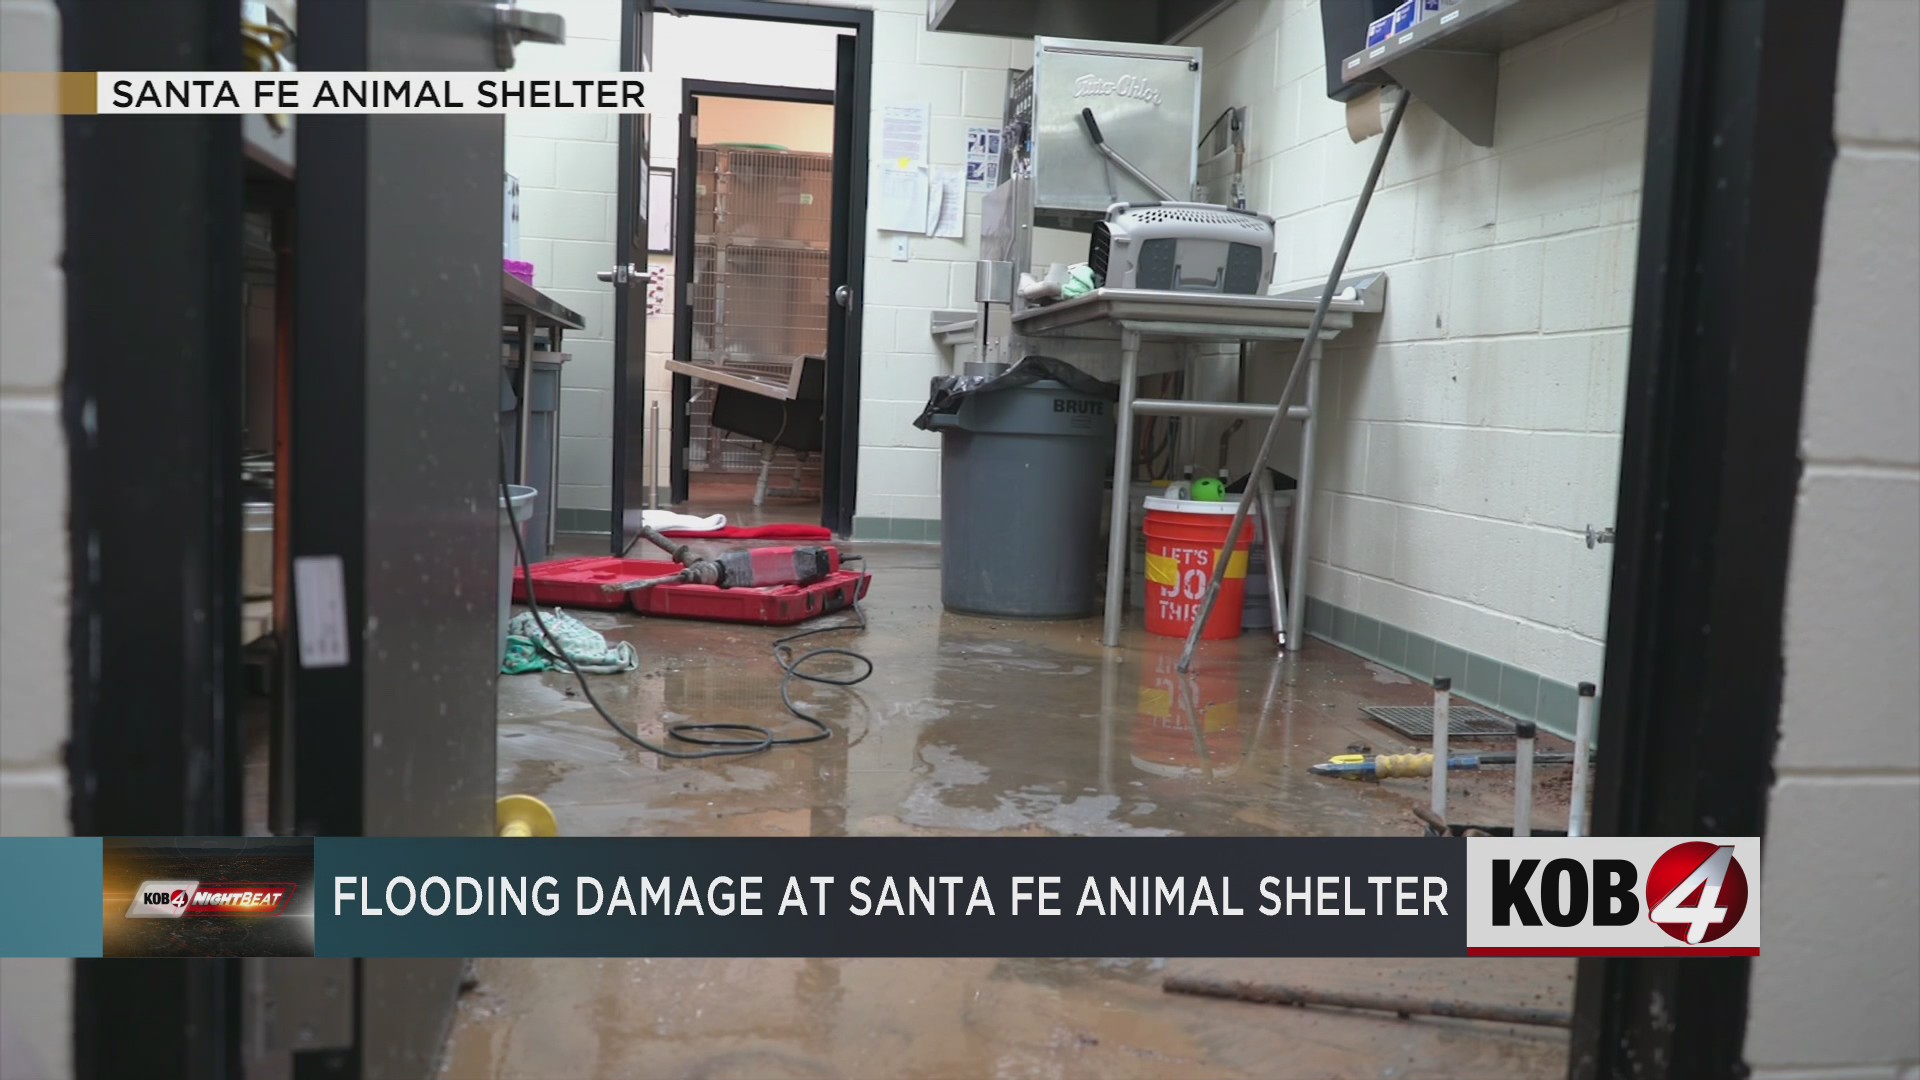 Dogs, cats displaced after flooding damage at Santa Fe Animal Shelter